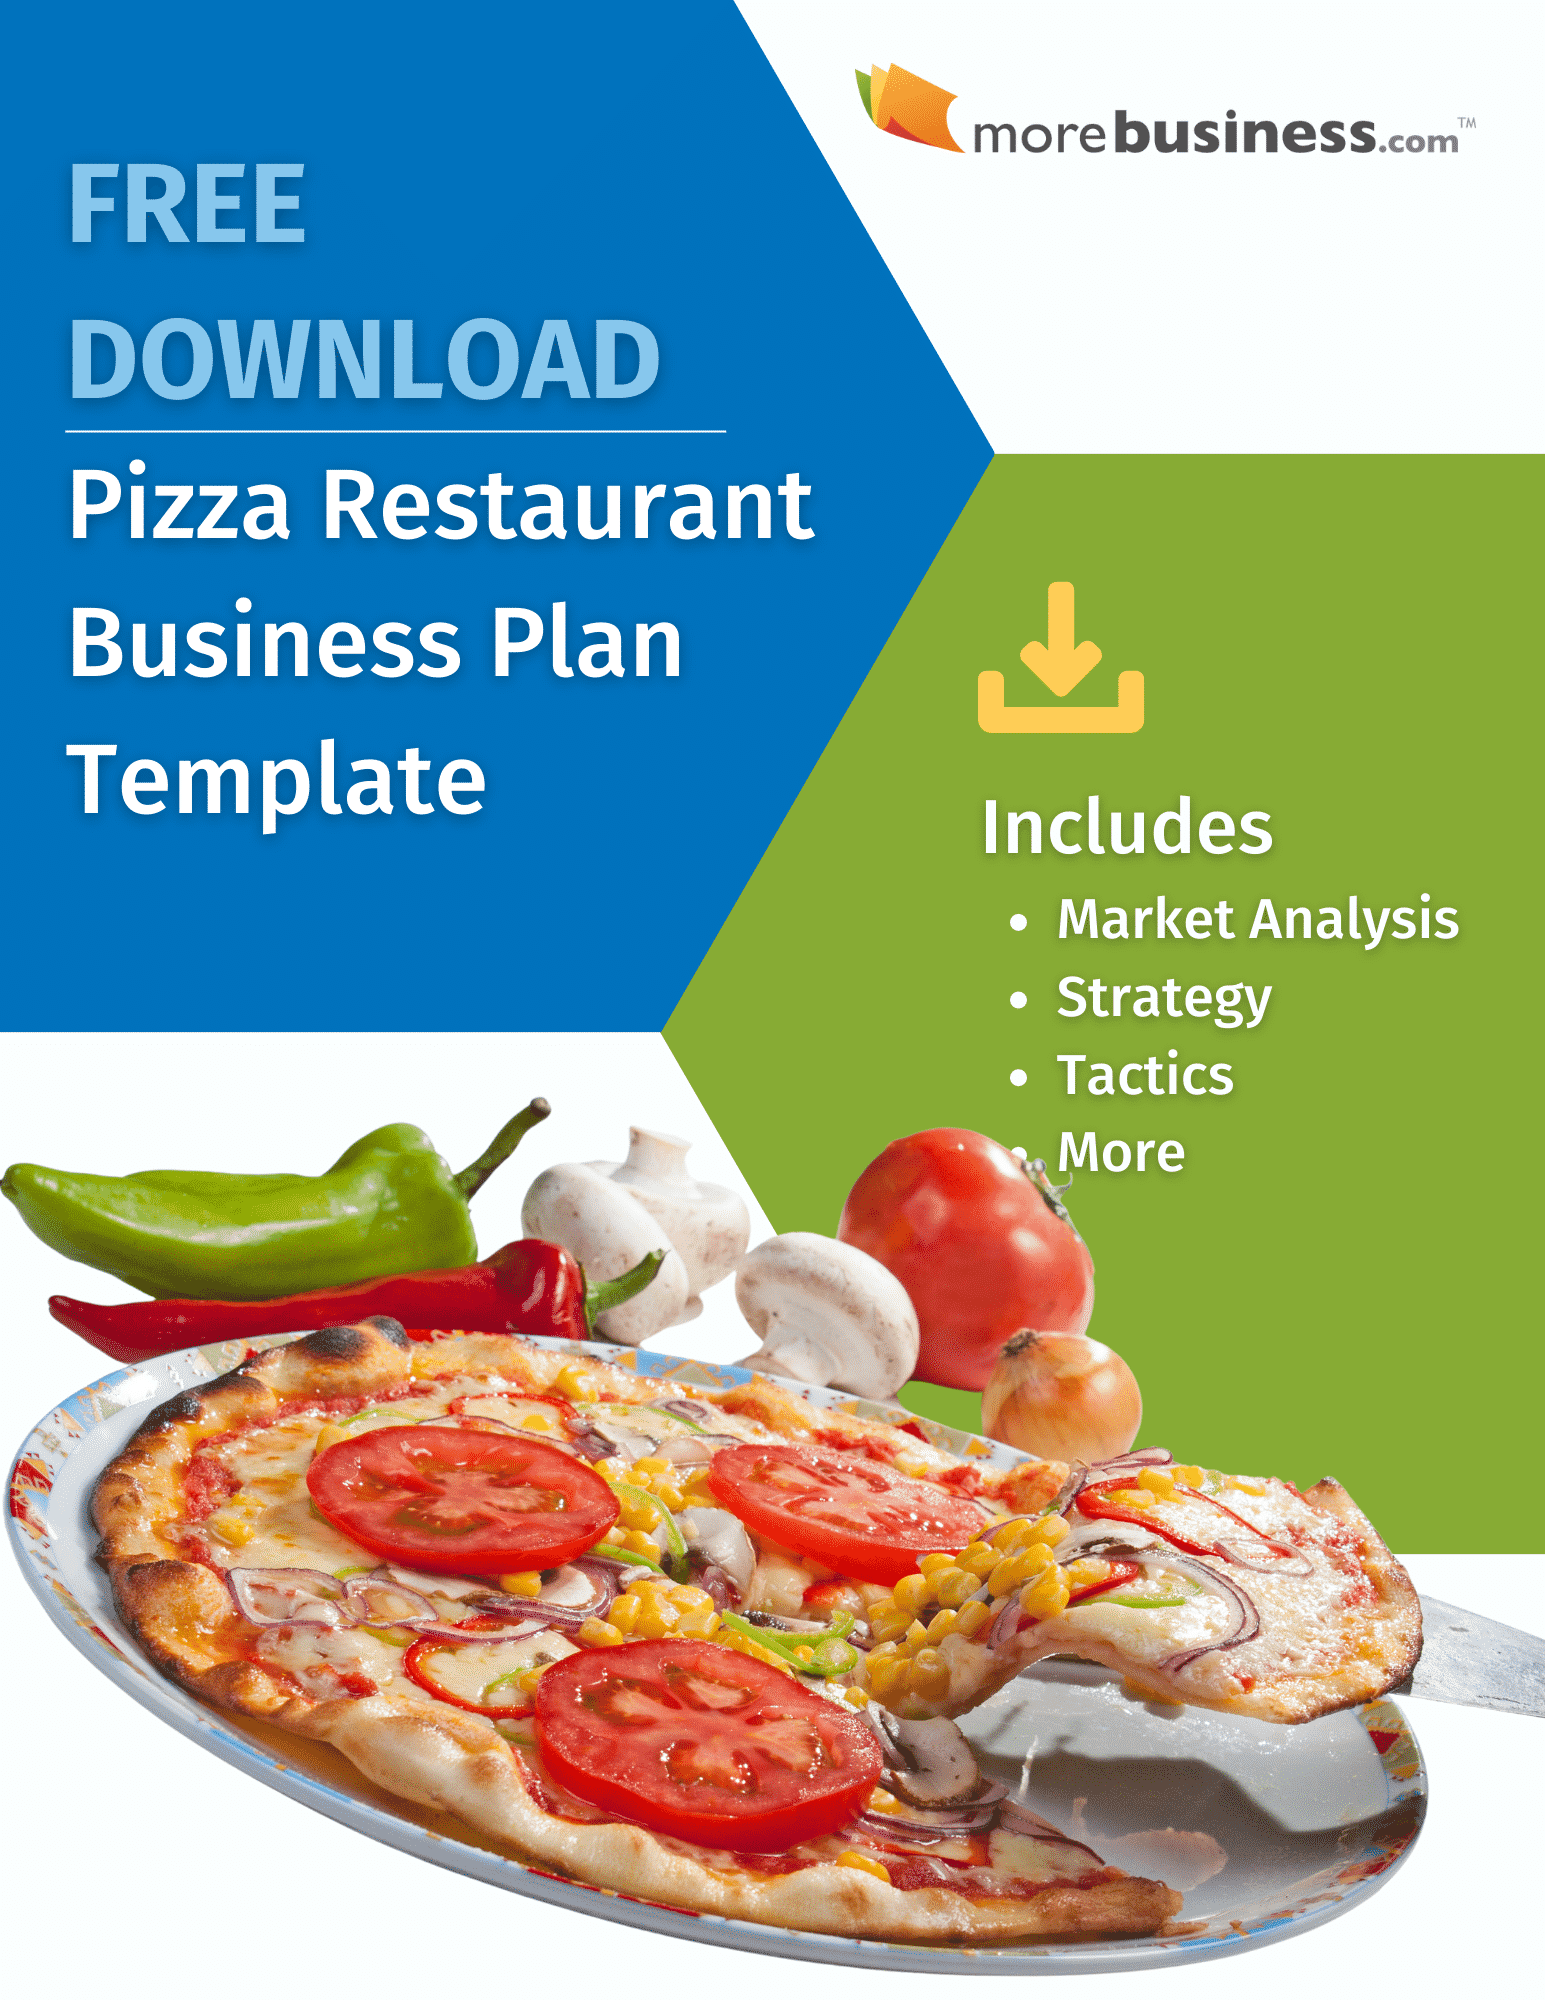 pizza restaurant business plan - free download